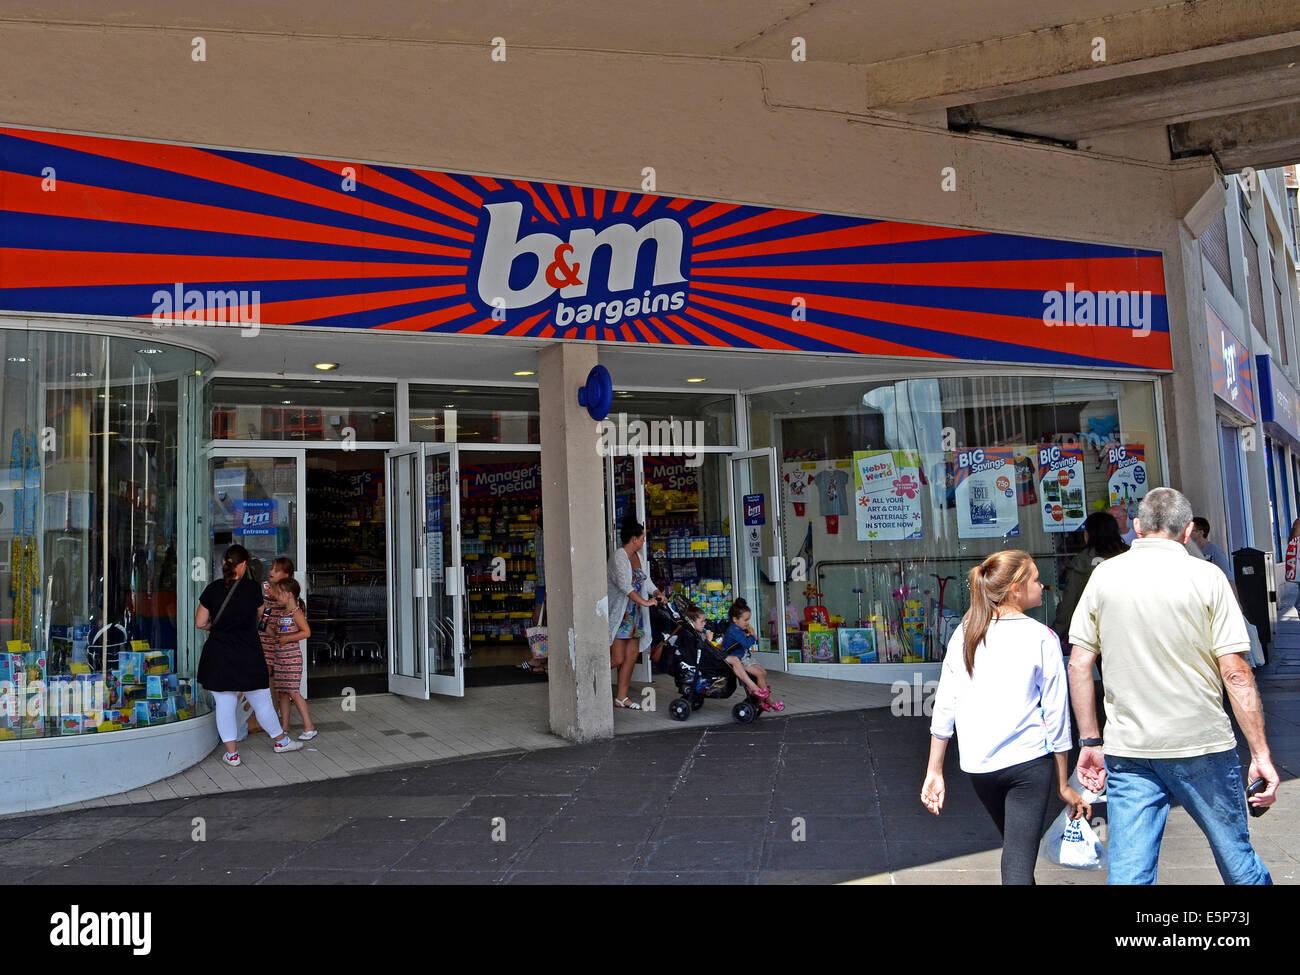 B&M bargains store Stock Photo